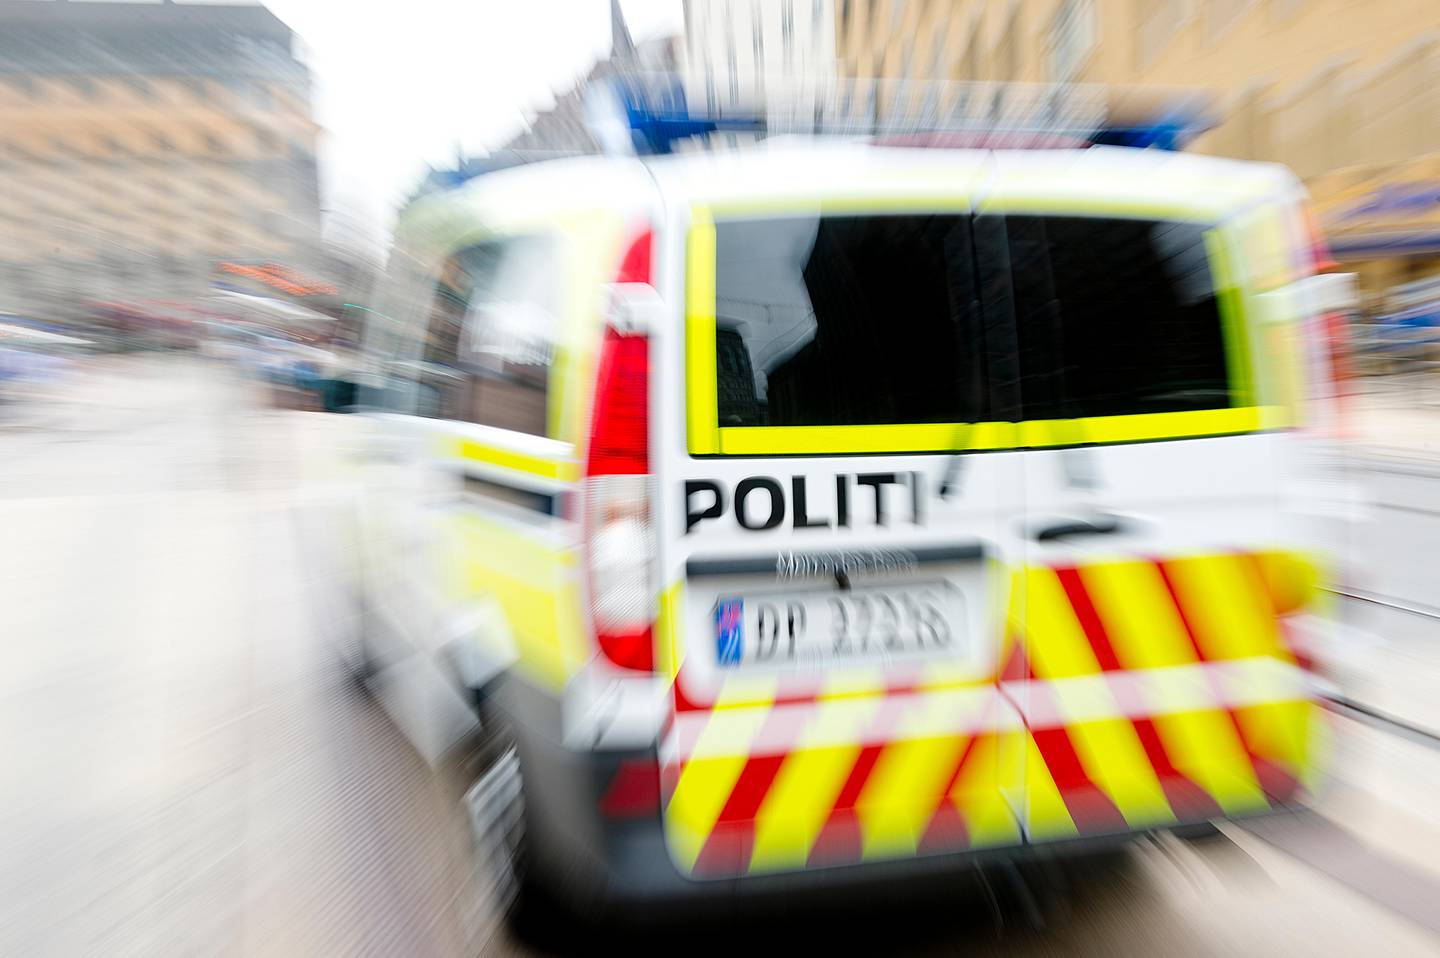 Oslo  20150713.
Illustrasjonsbilde av politibil i Oslo.
Foto: Jon Olav Nesvold / NTB scanpix